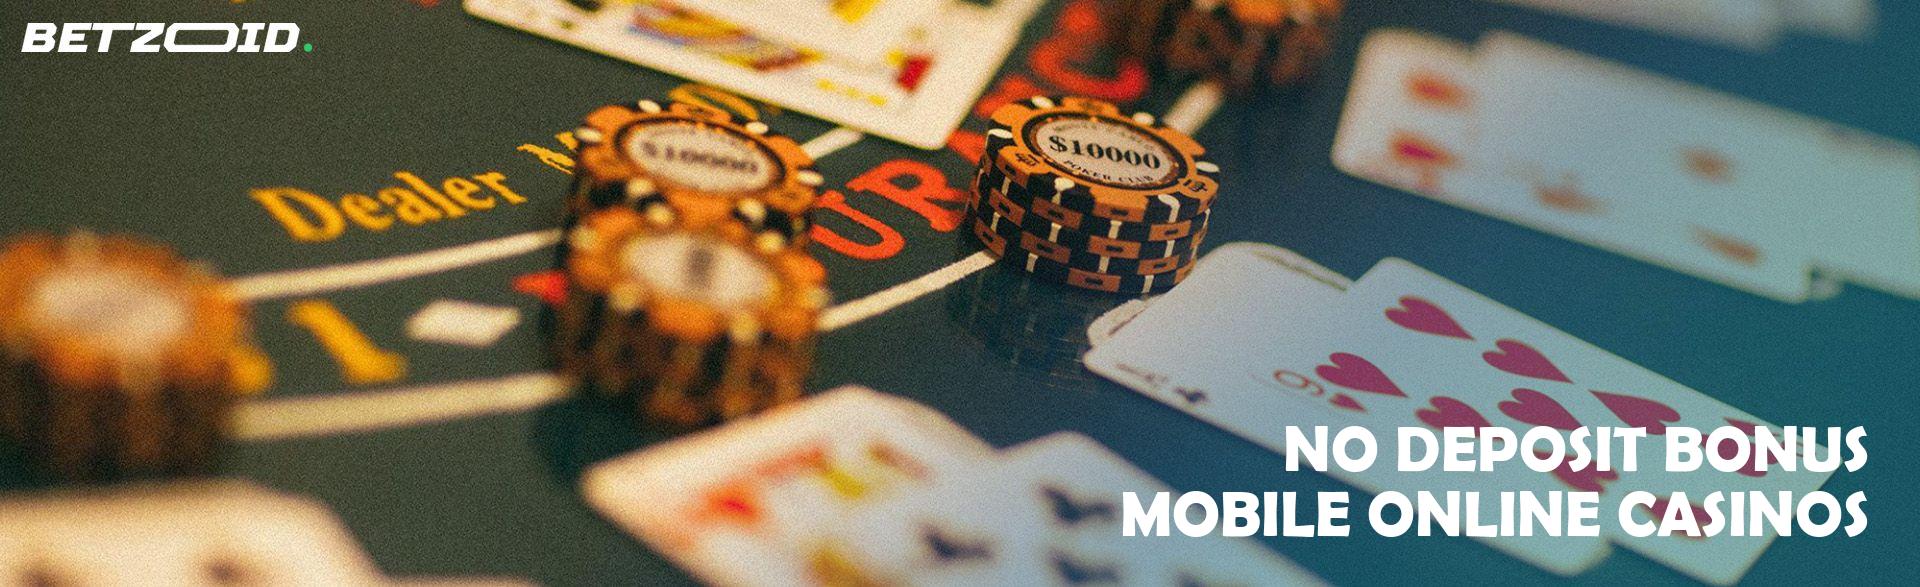 No Deposit Bonus Mobile Online Casinos.